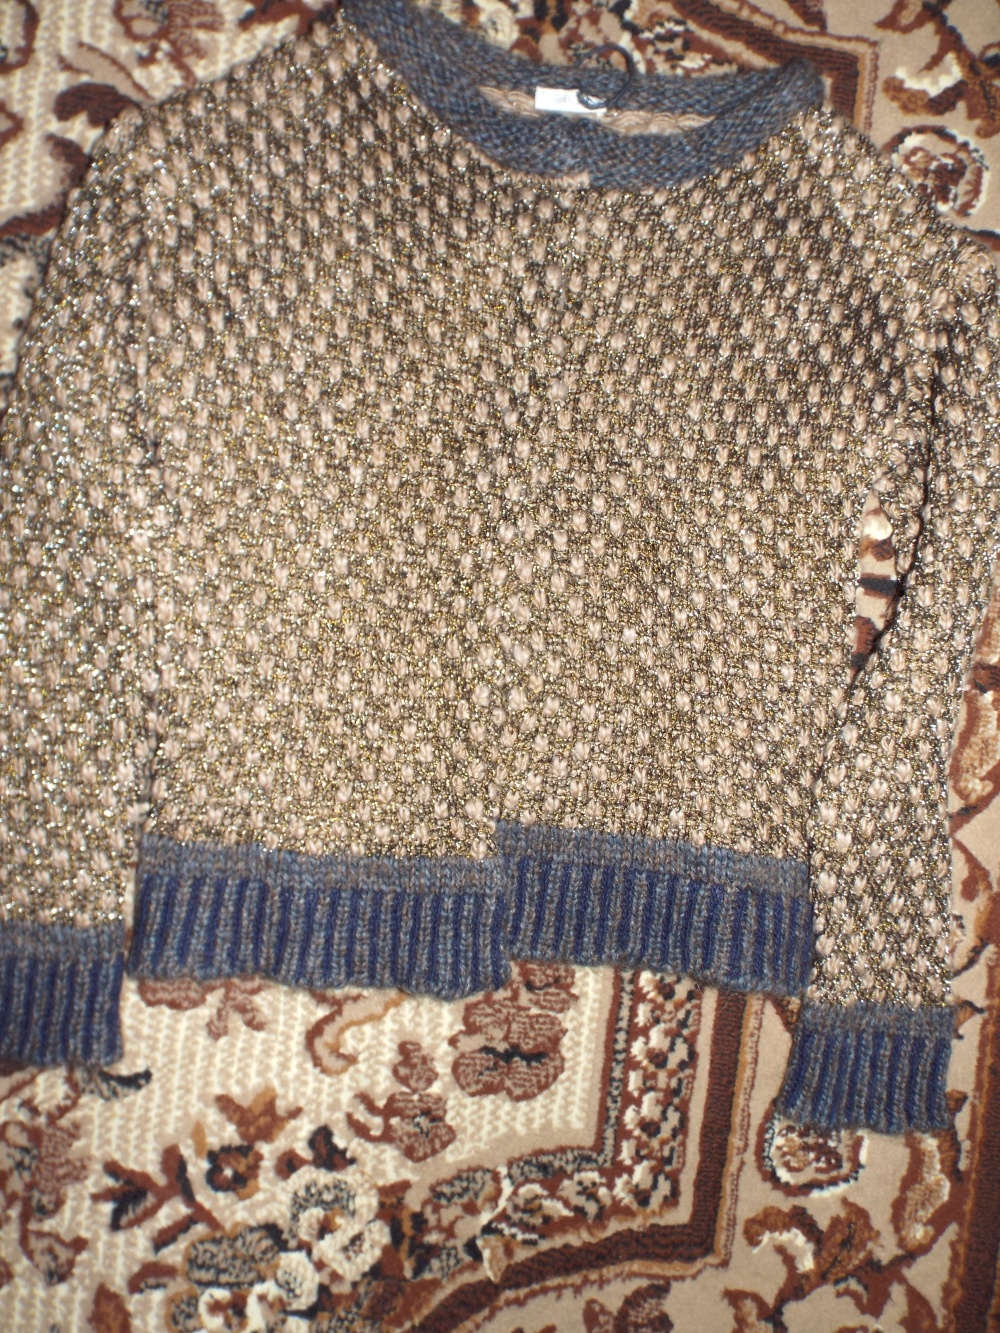 Кардиган (свитер), Gold Case, размер 44, 44-46  (росс.).